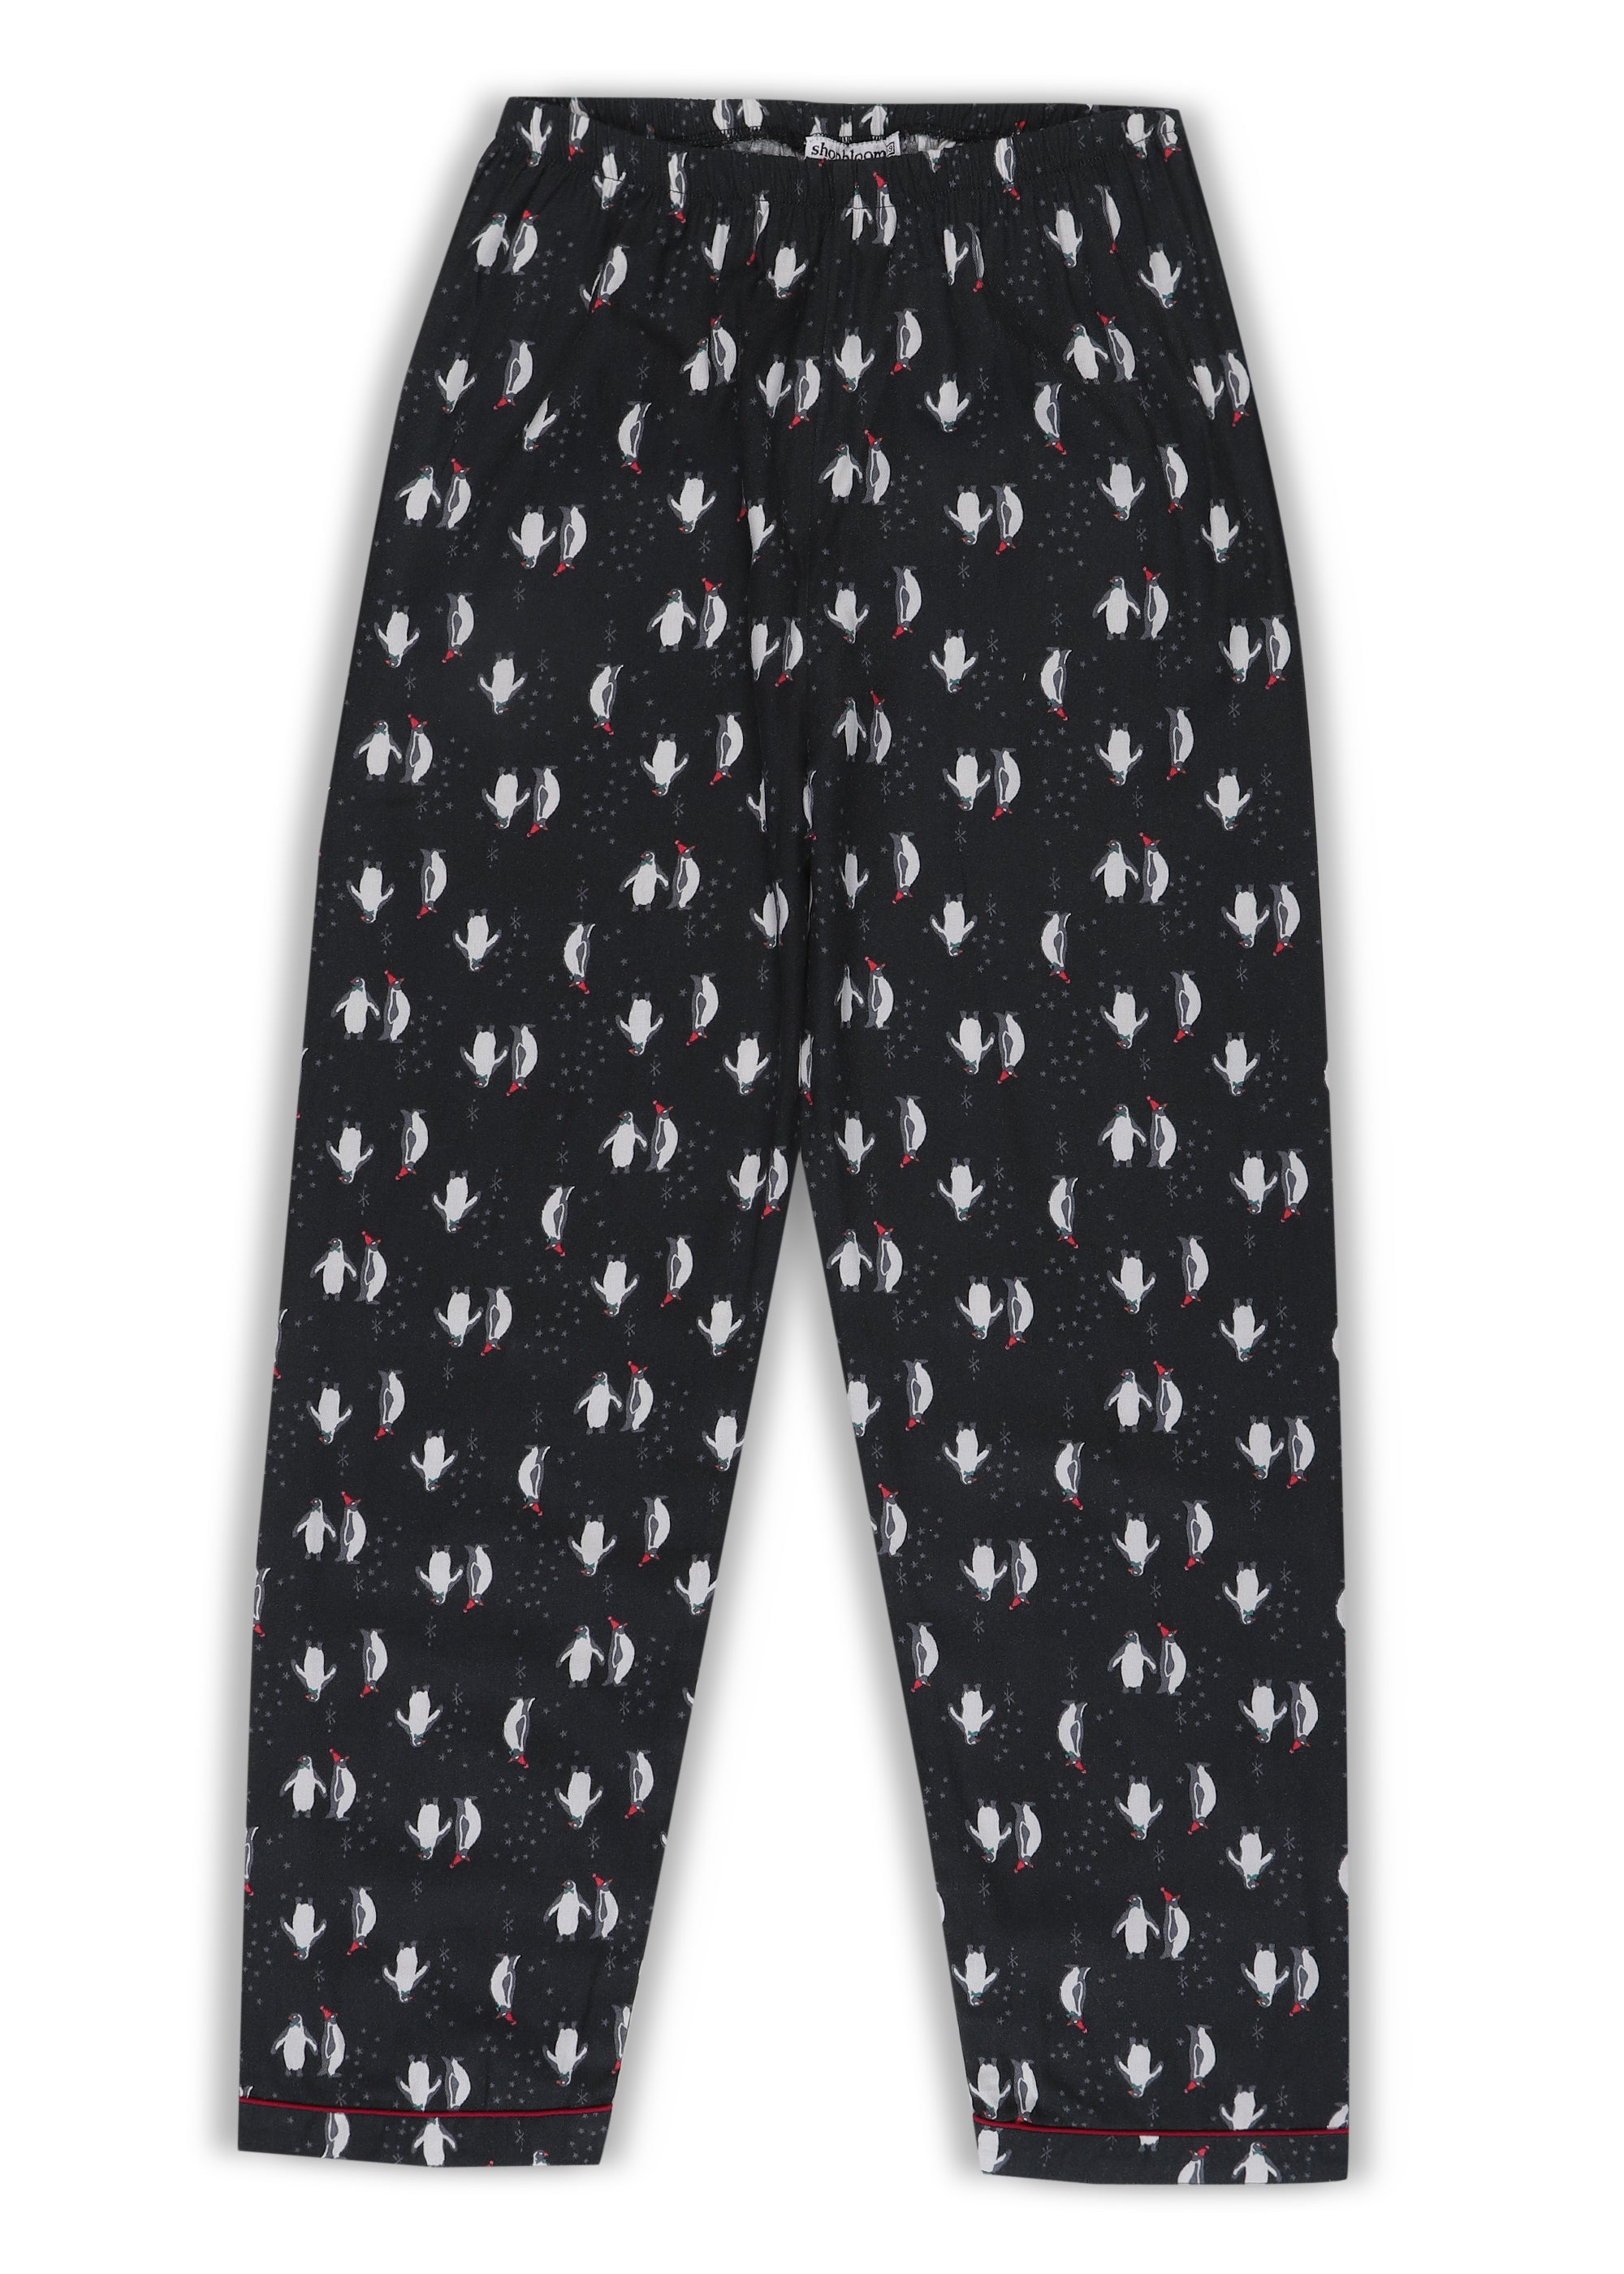 Penguin Love Print Cotton Flannel Long Sleeve Kid's Night Suit